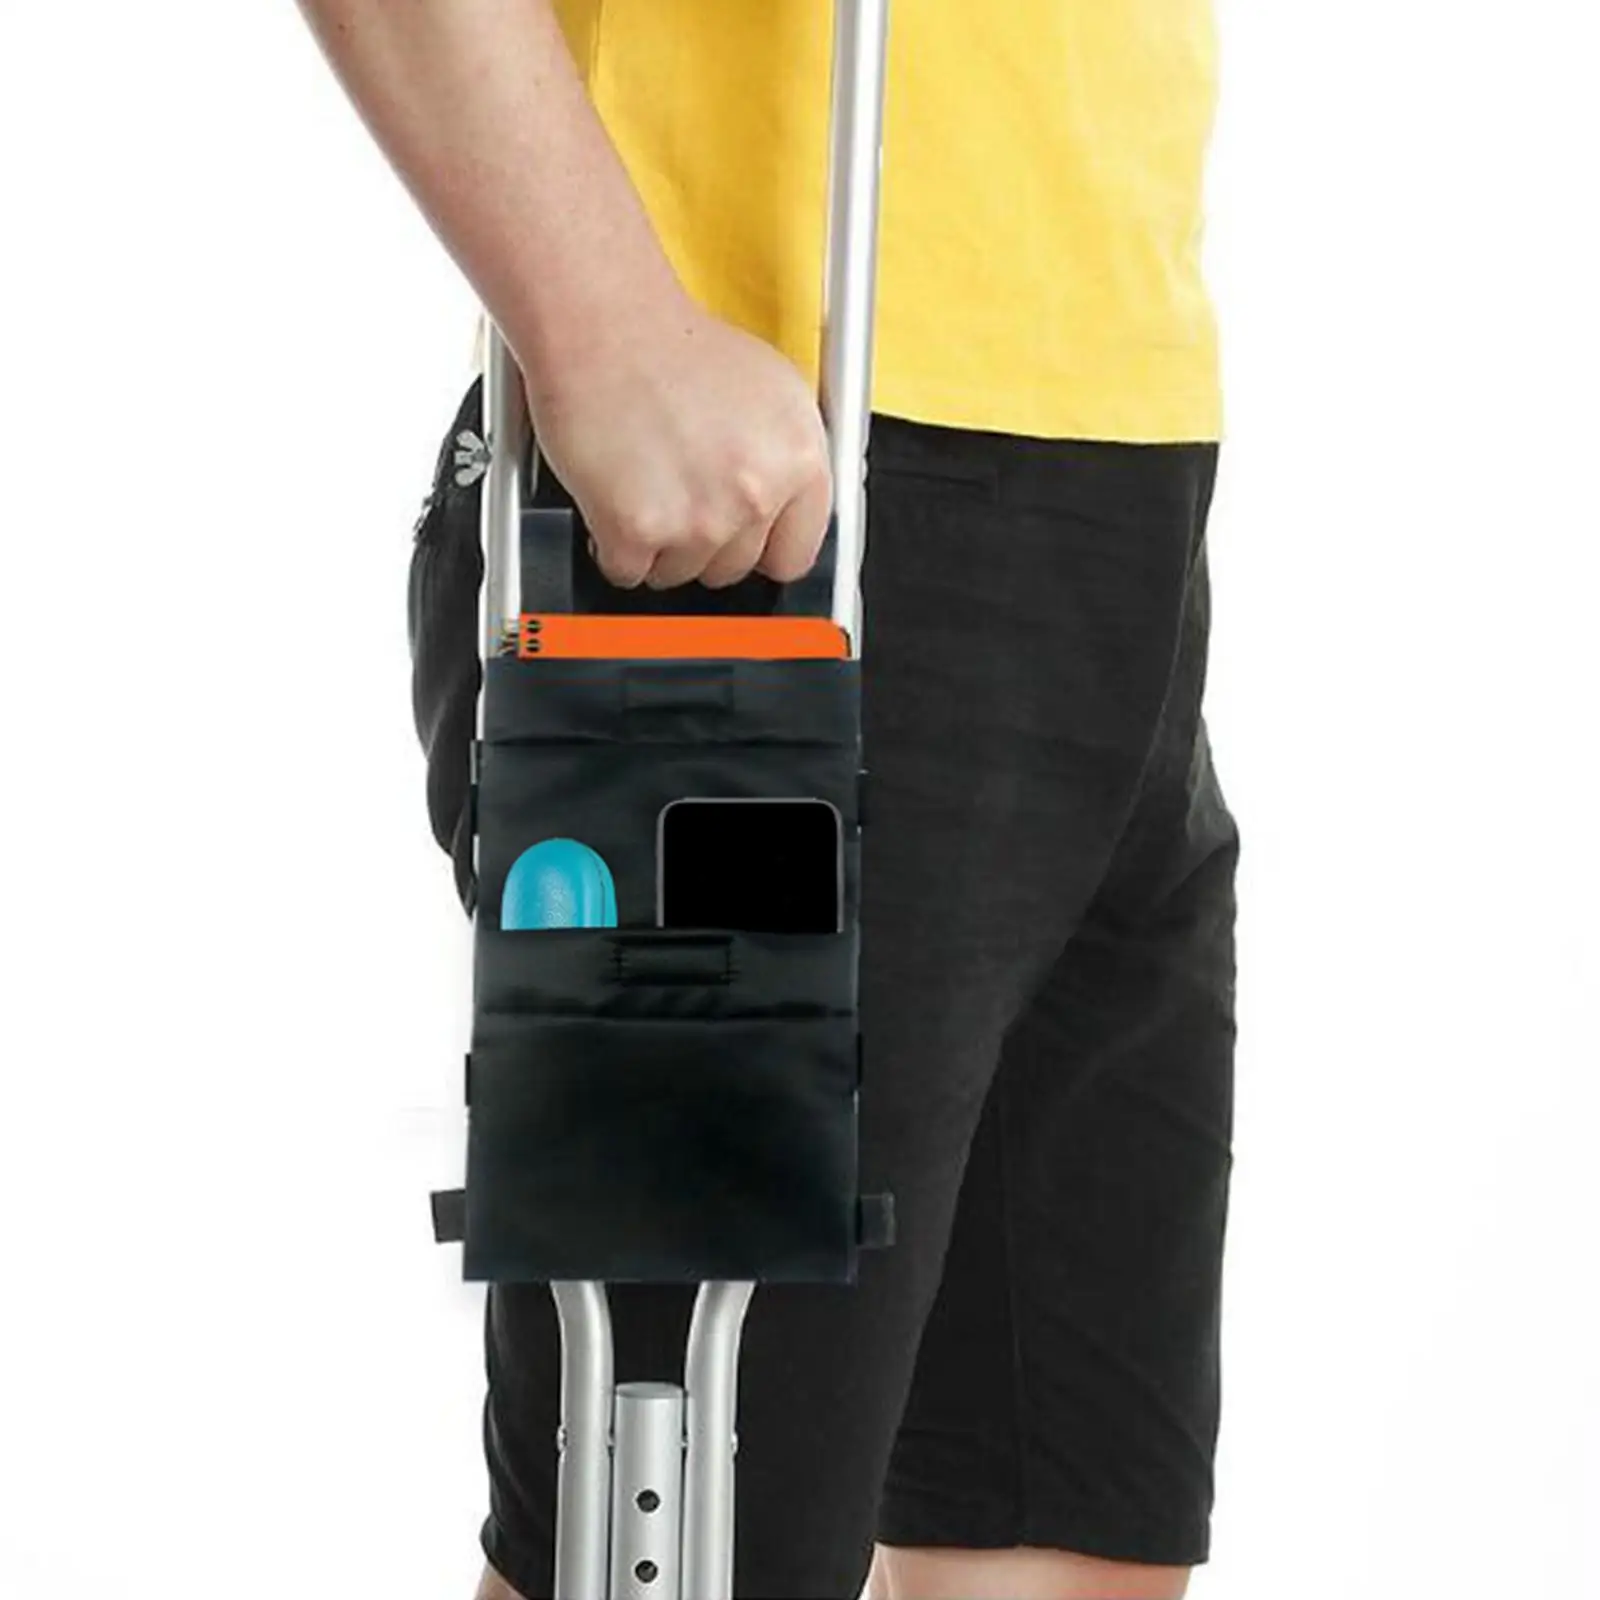 Crutch Bag Orthopedic Accessories Underarm Crutches Pouch Pocket Adults Women